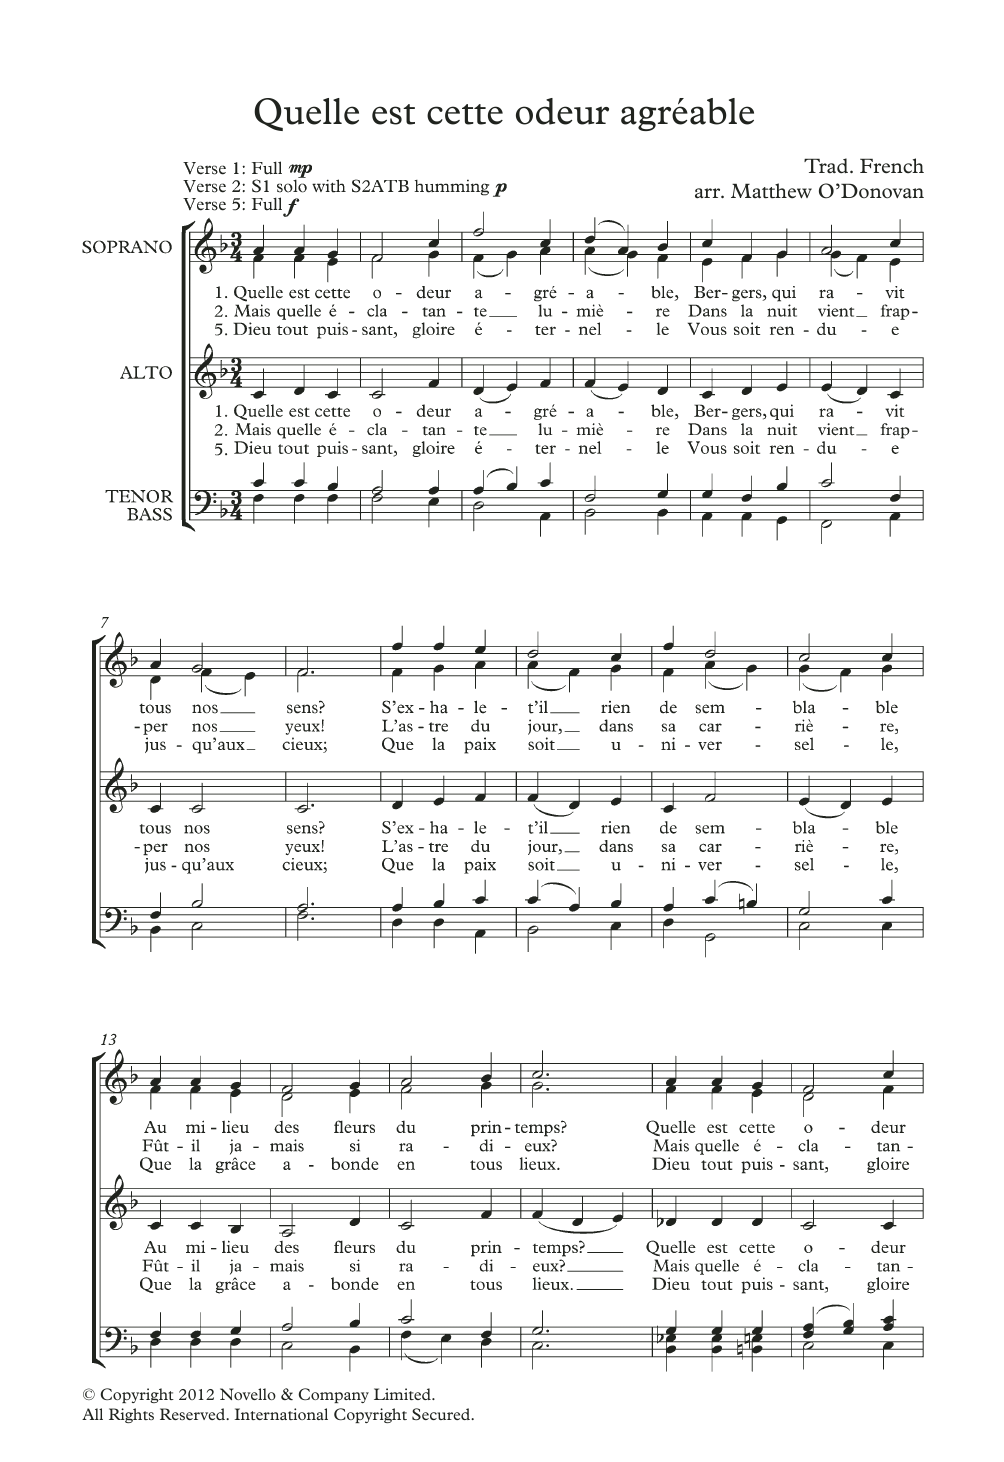 Traditional Quelle Est Cette Odeur Agreable (arr. Matthew O'Donovan) Sheet Music Notes & Chords for SATB Choir - Download or Print PDF